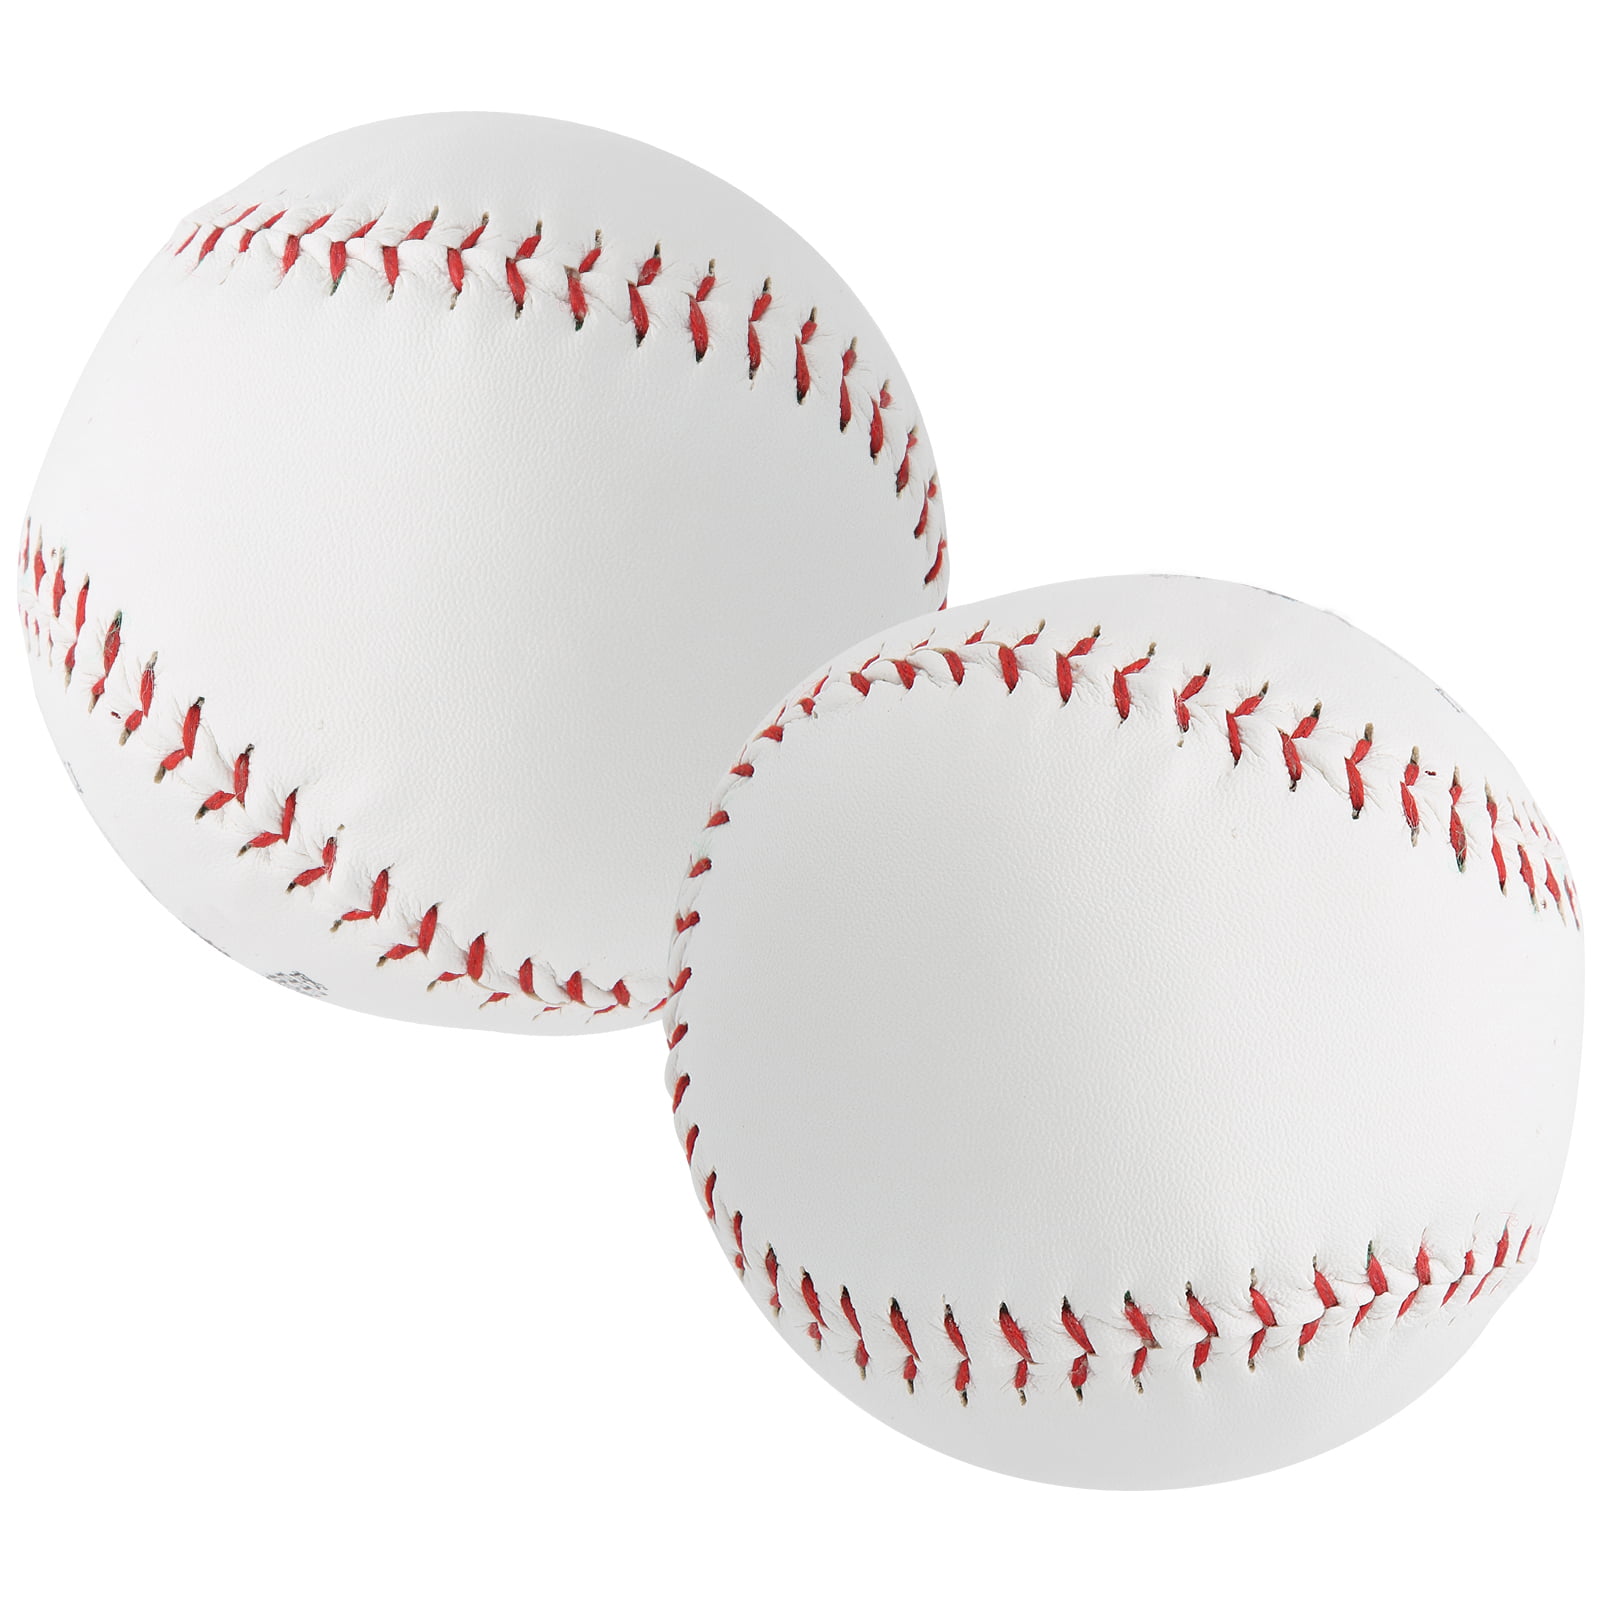 Central Soft Baseball Softball Training & Practice Rounders Ball 